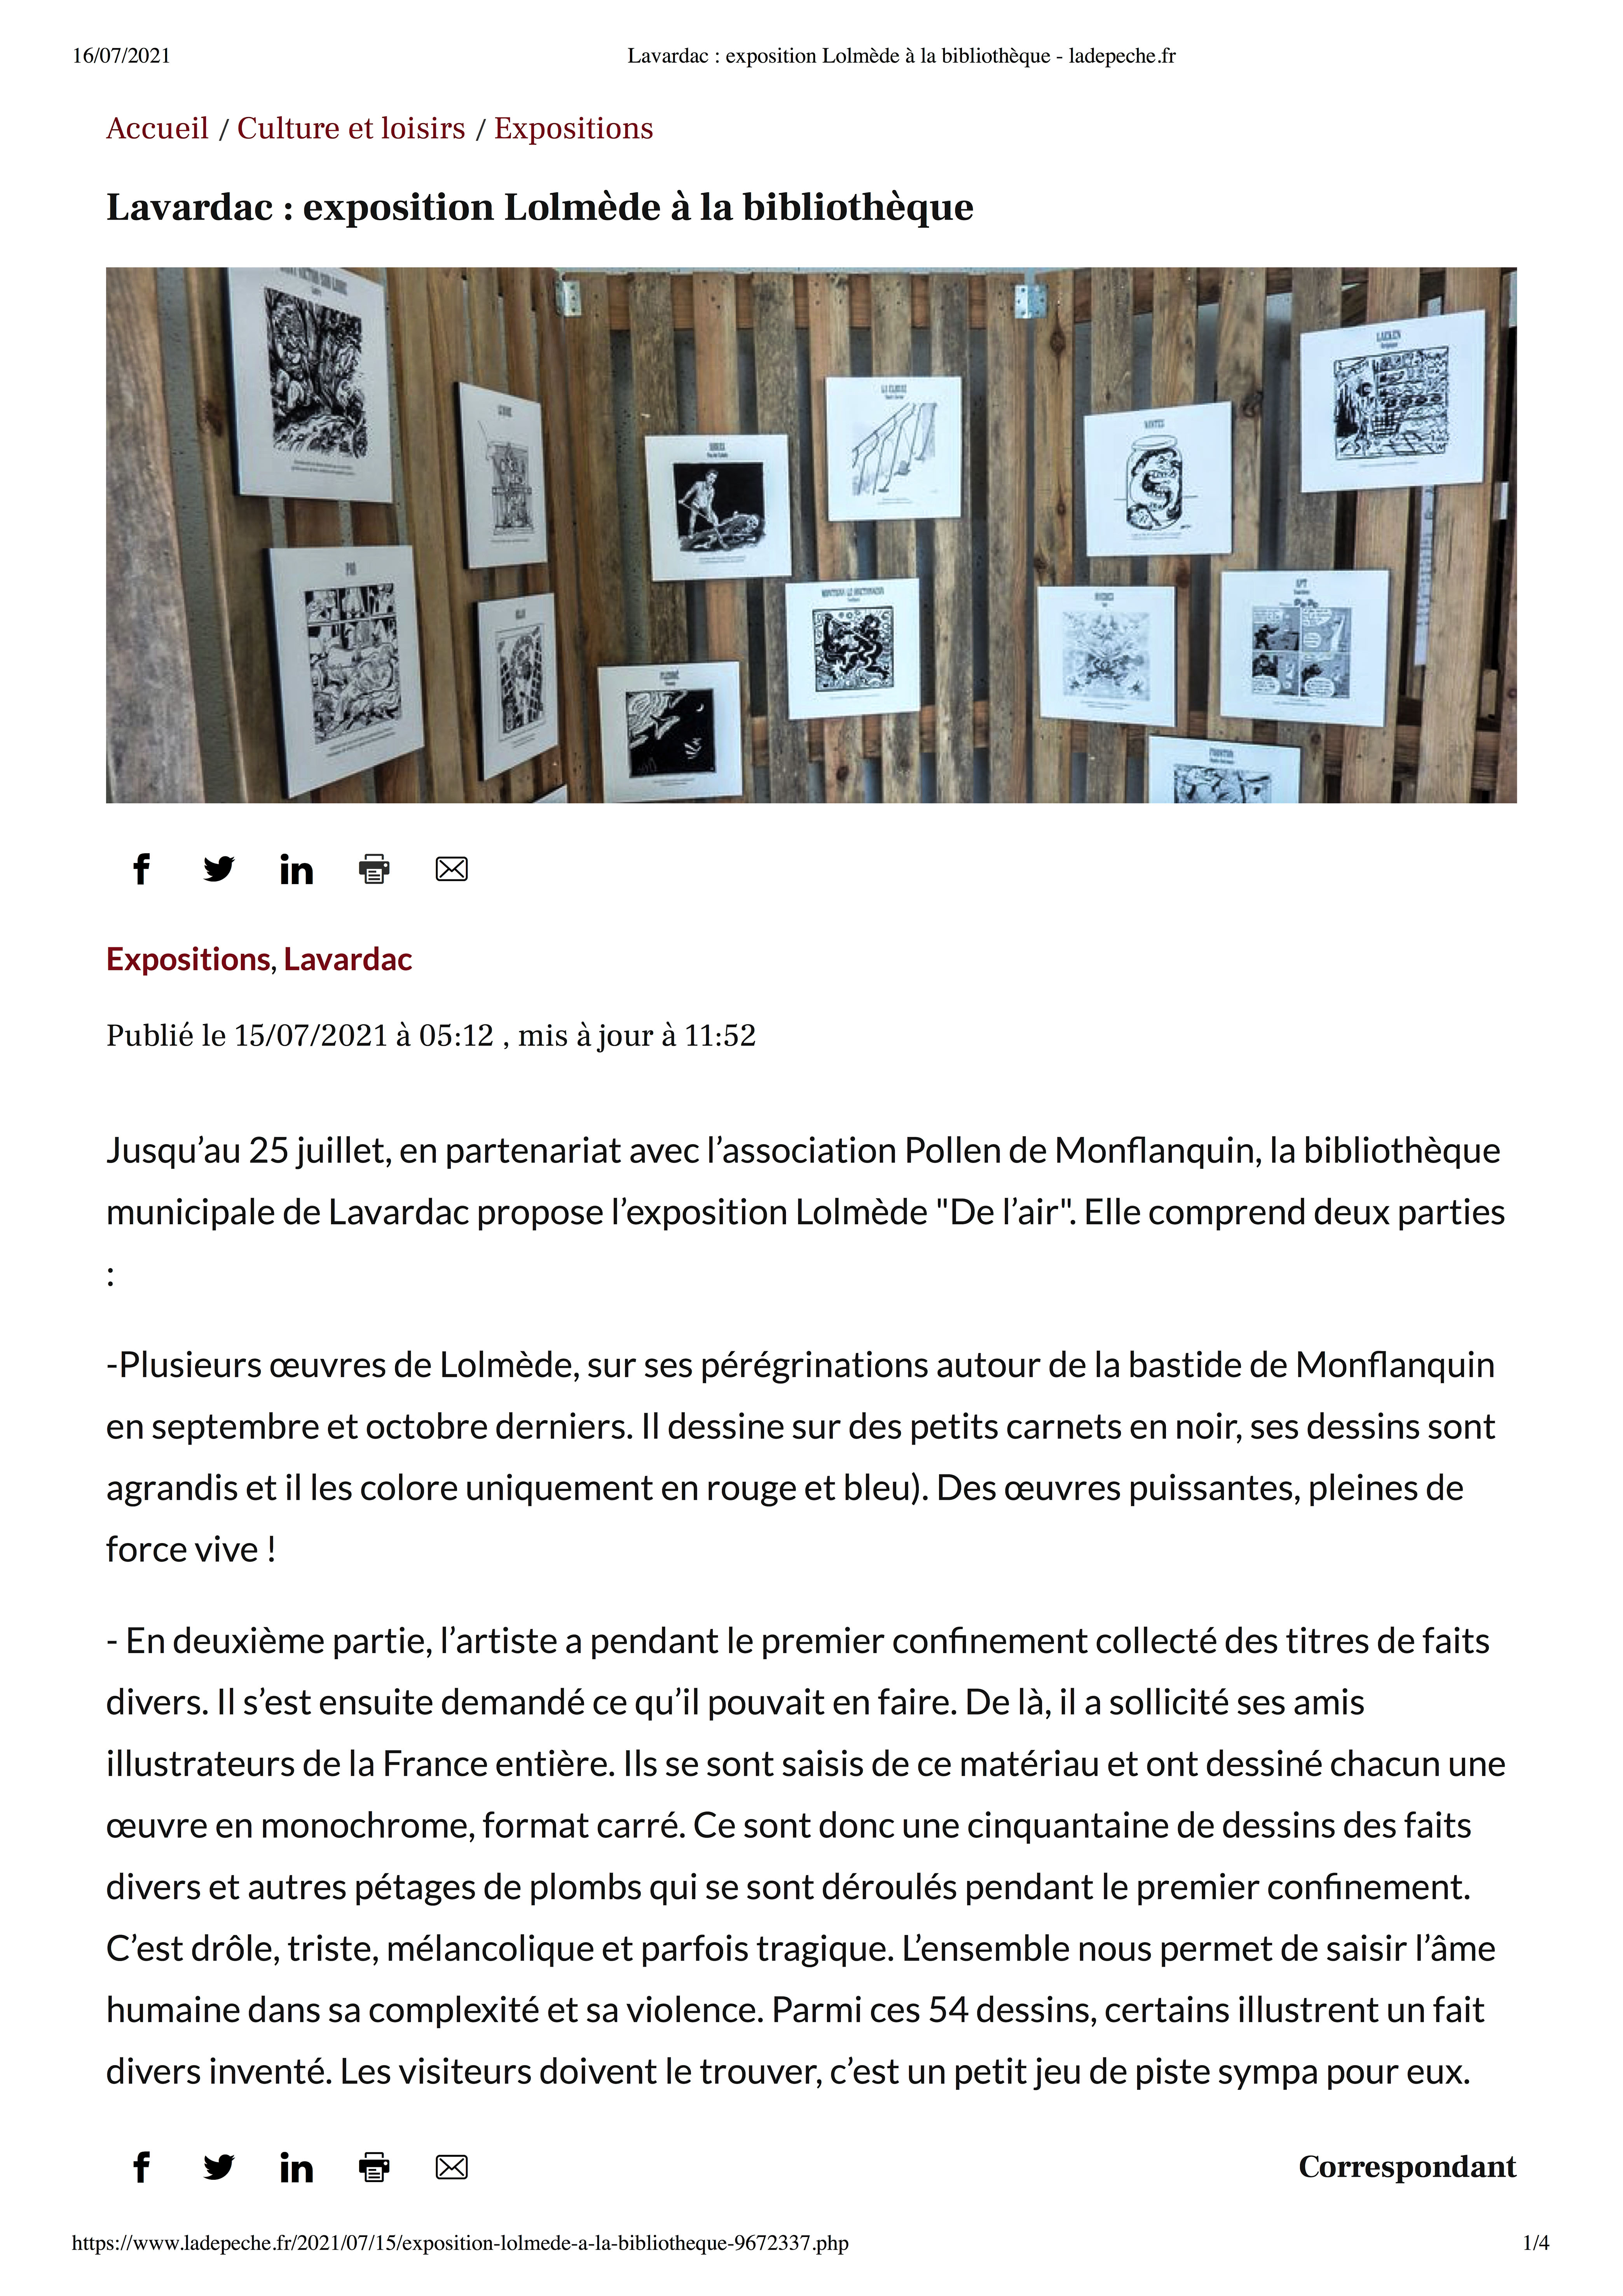 Mu Blondeau - La Depeche - Expo Lavardac - Lolmède